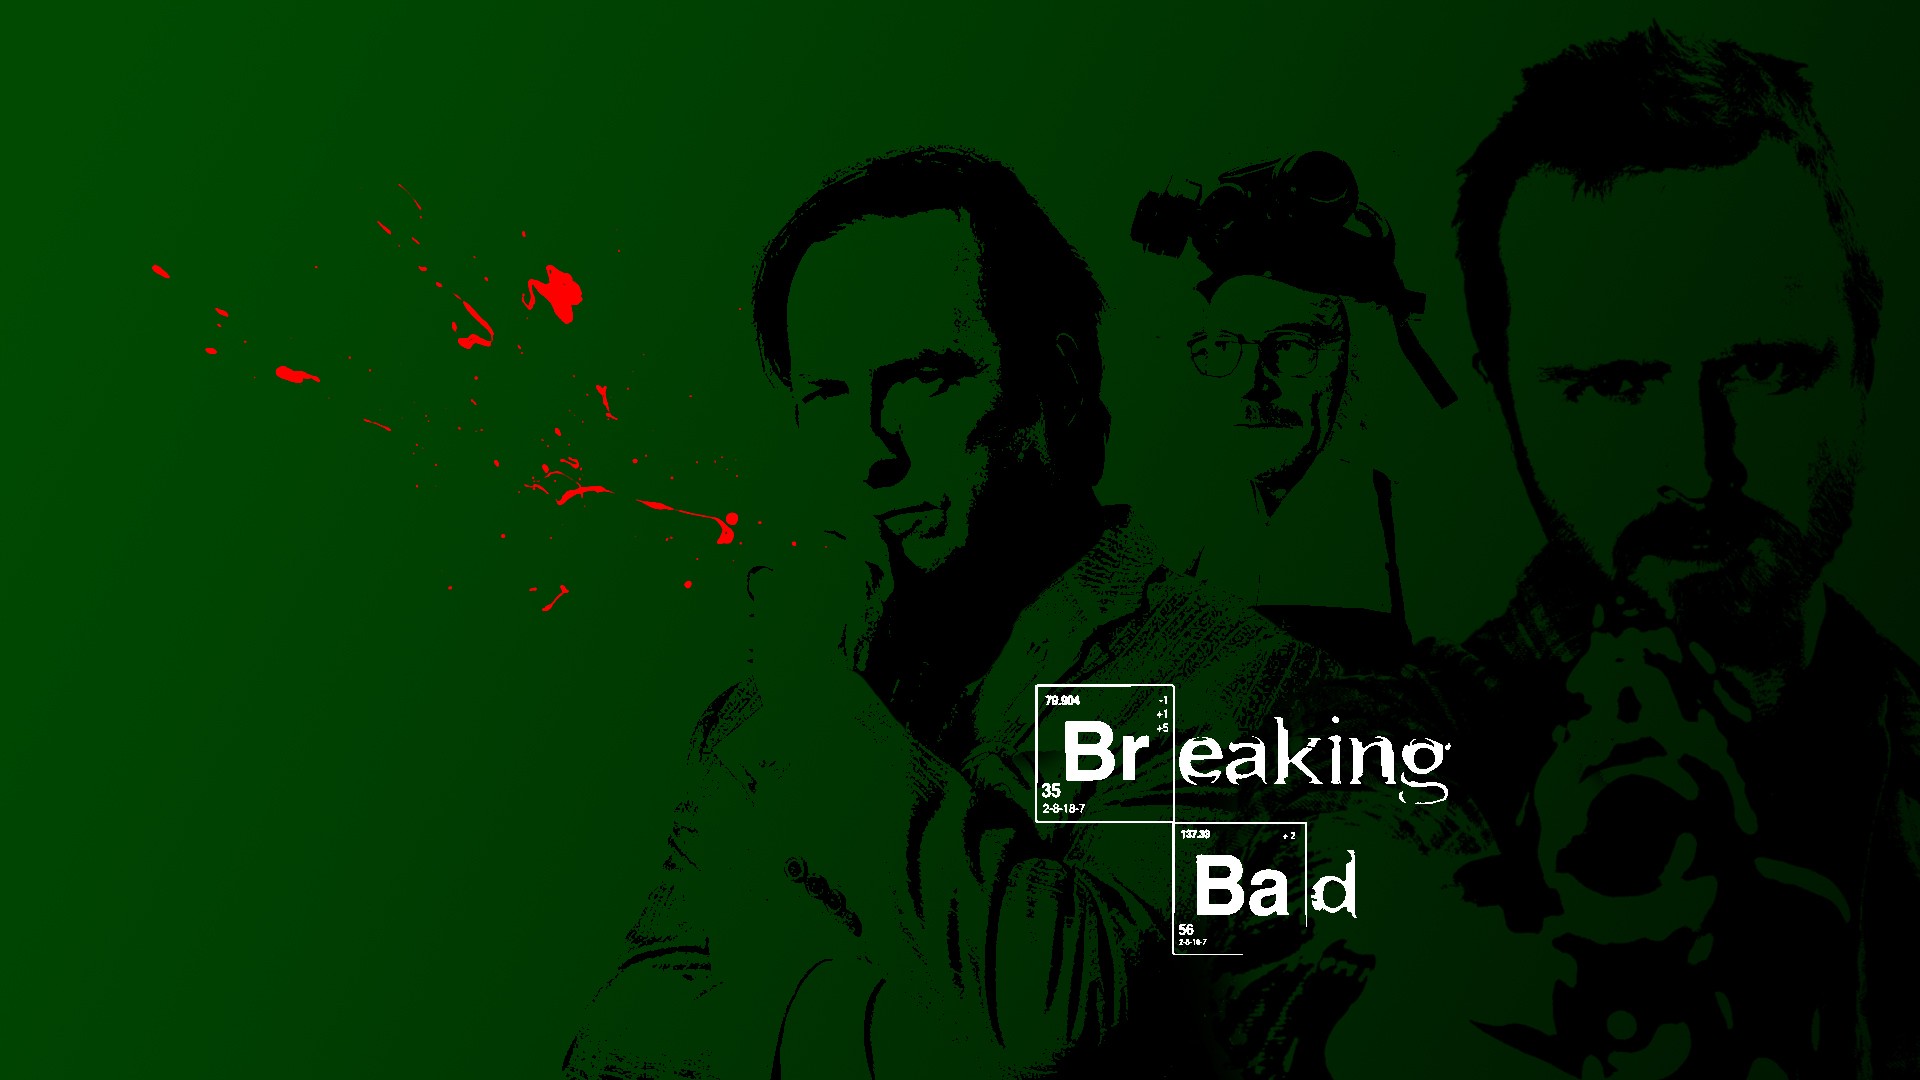 Breaking Bad Heisenberg Saul Goodman Jesse Pinkman Walter White Green Background 1920x1080